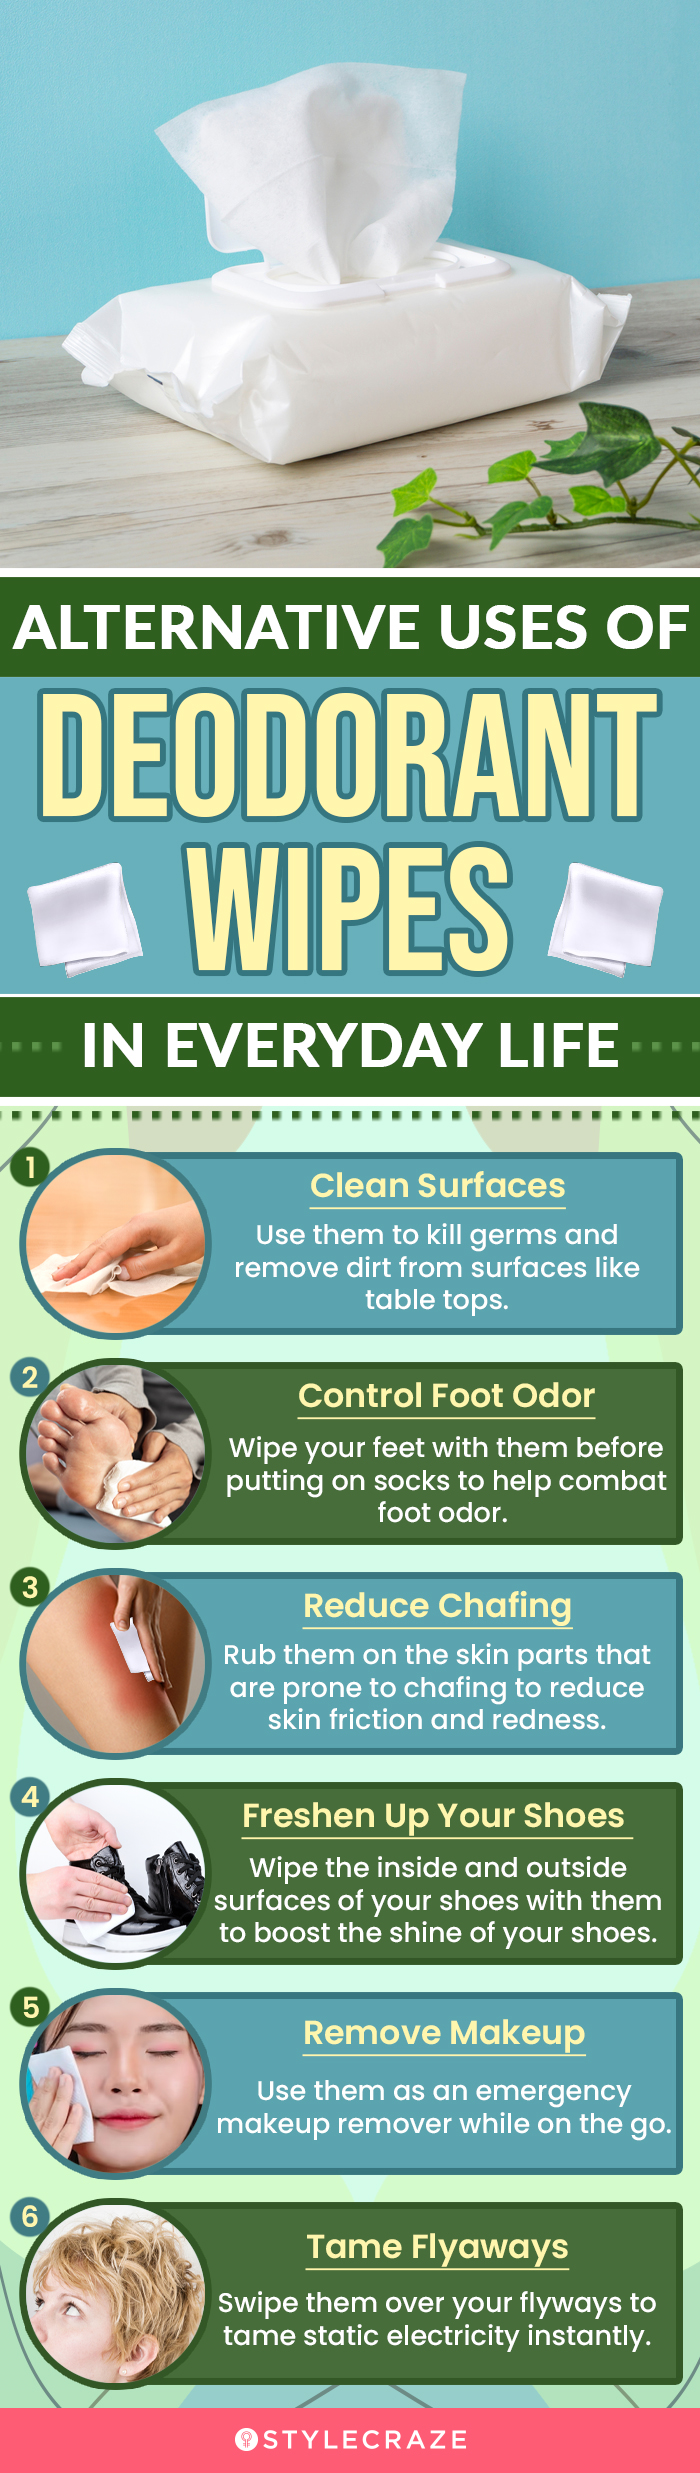 Alternative Uses Of Deodorant Wipes In Everyday Life (infographic)